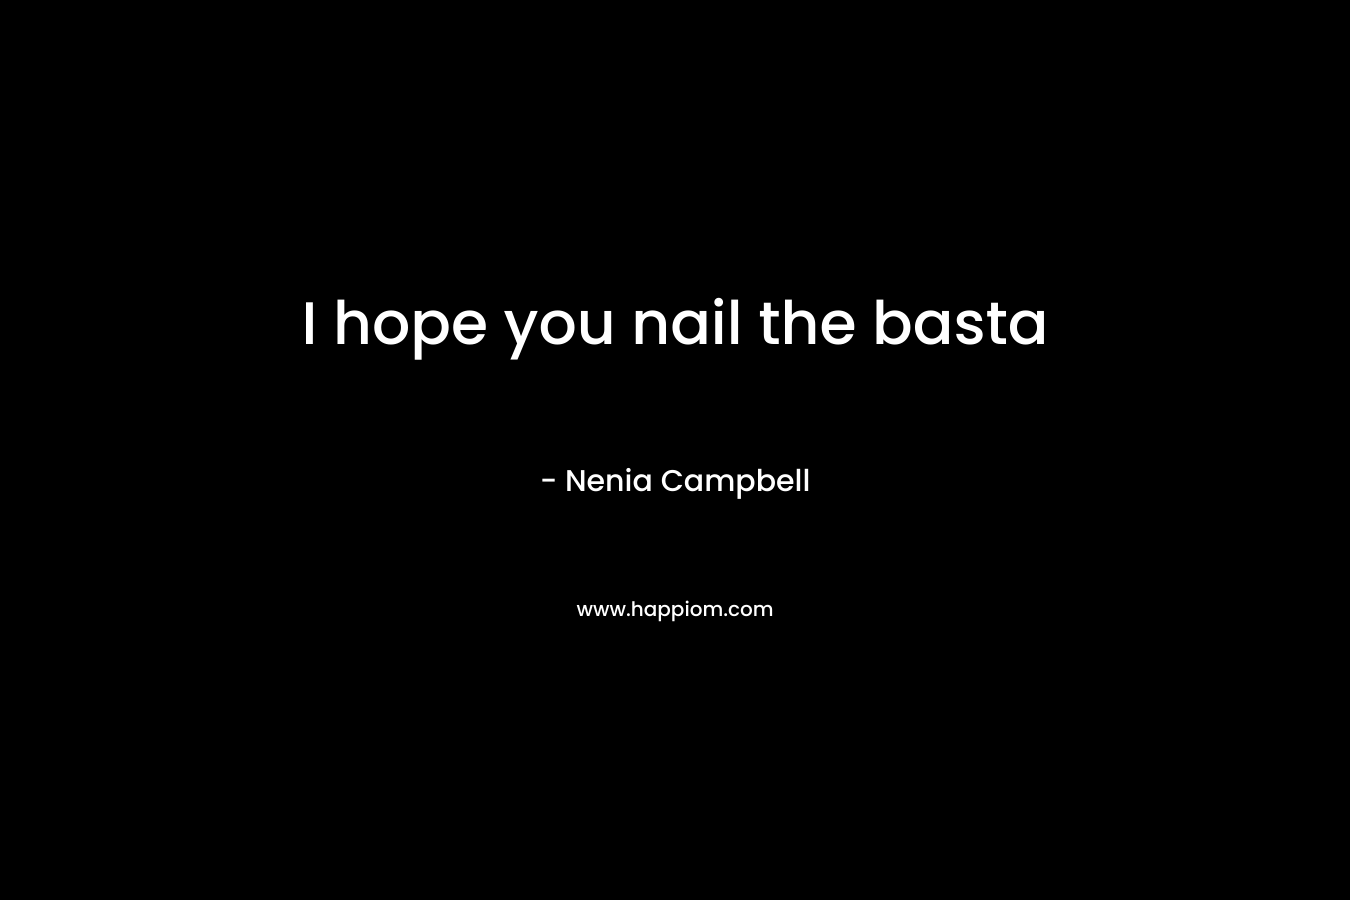 I hope you nail the basta